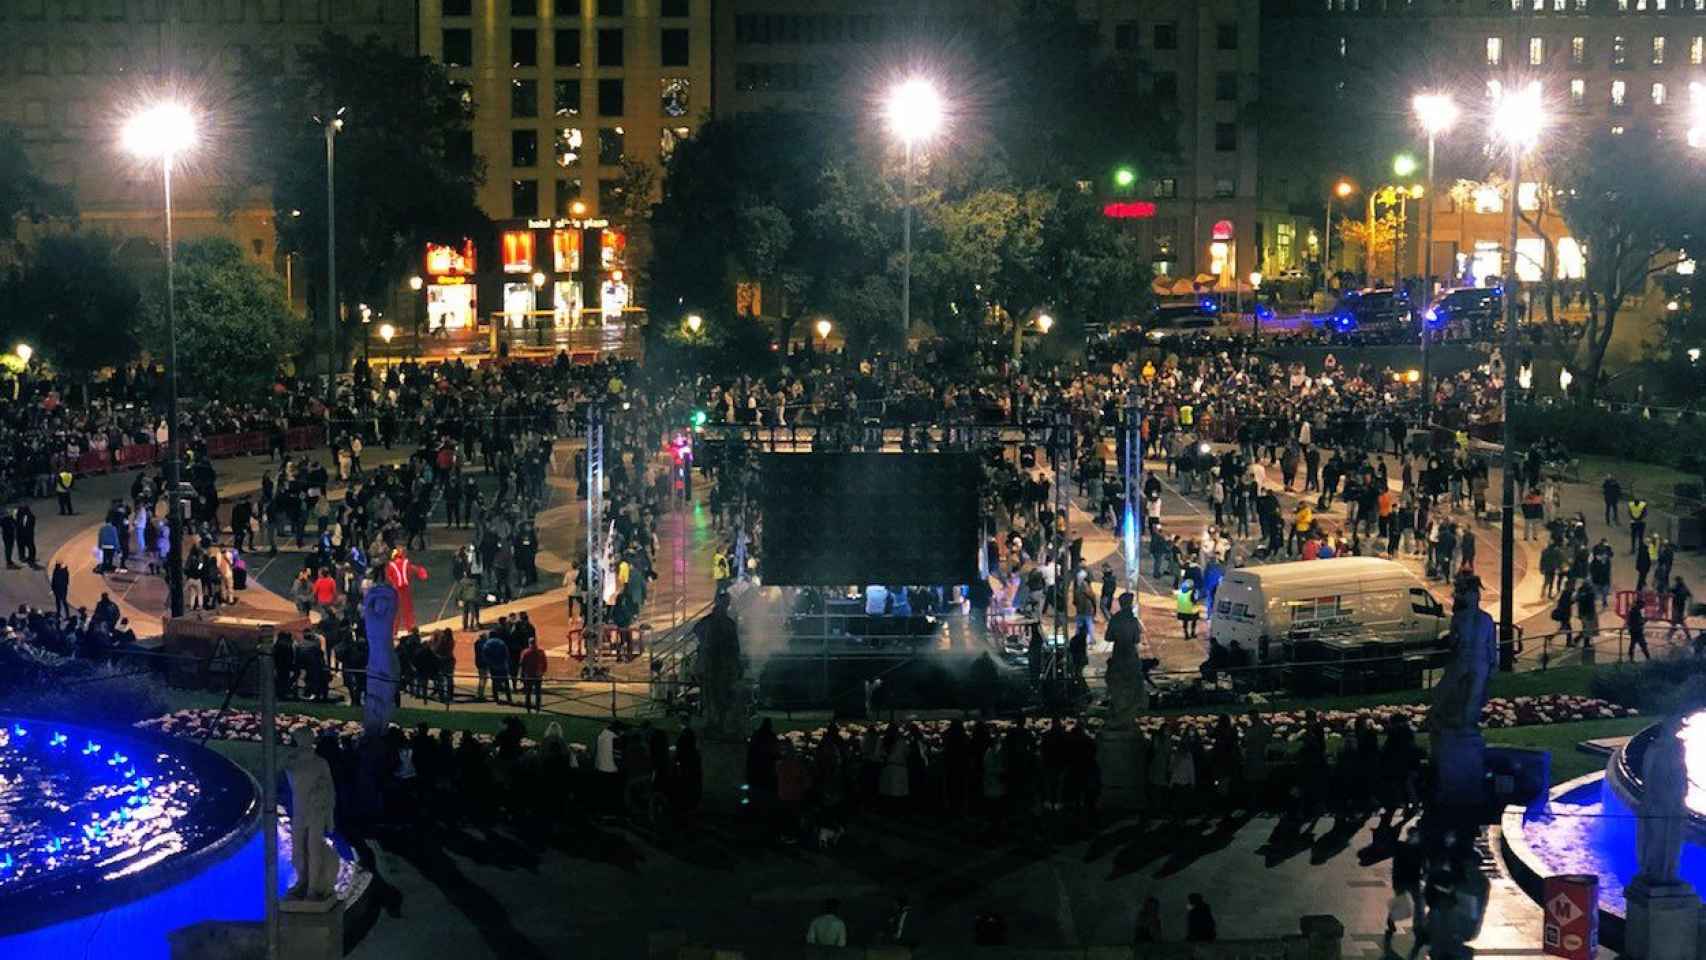 Discoteca improvisada en plaza Catalunya / TWITTER - @gpsantanaq